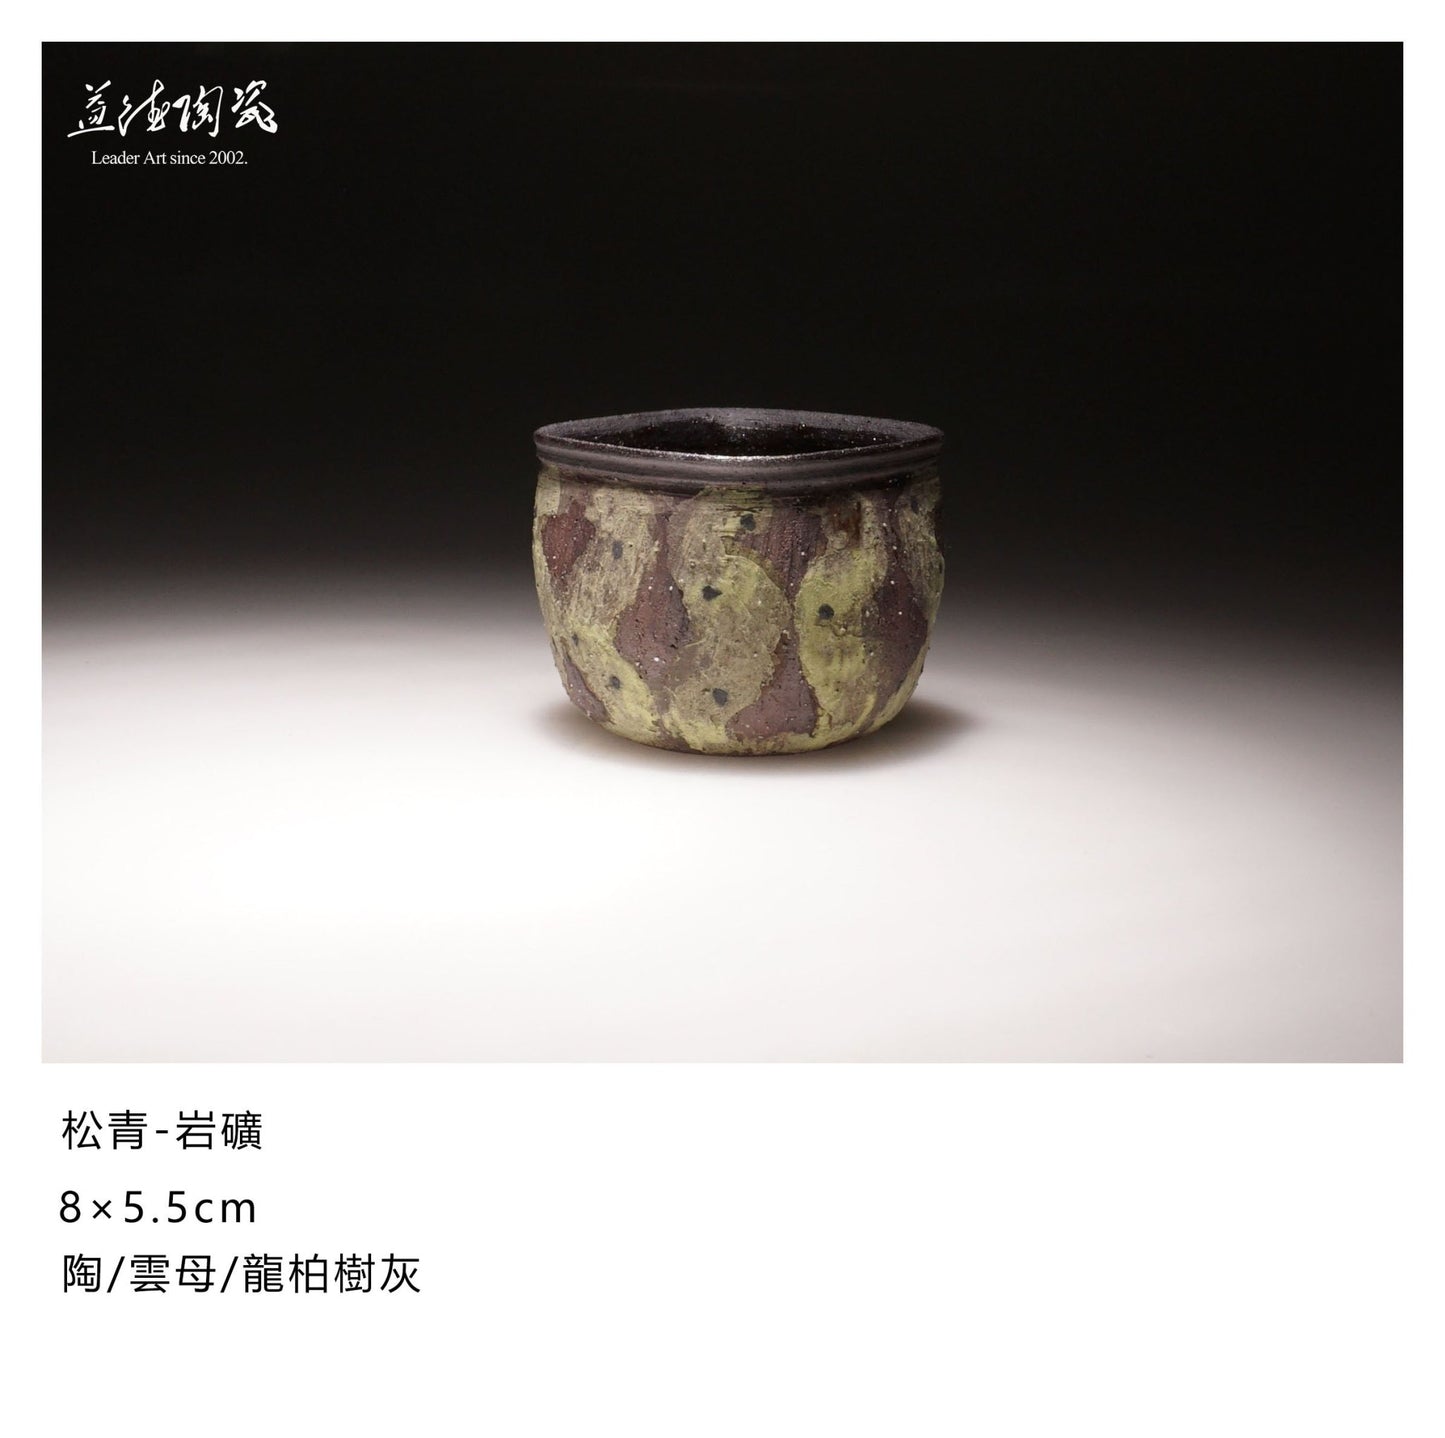 Sabina chinensis - Natural rock and ore Teapot - LEADER 益德 | 居家設計藝品・人文茶器・空間美學作品